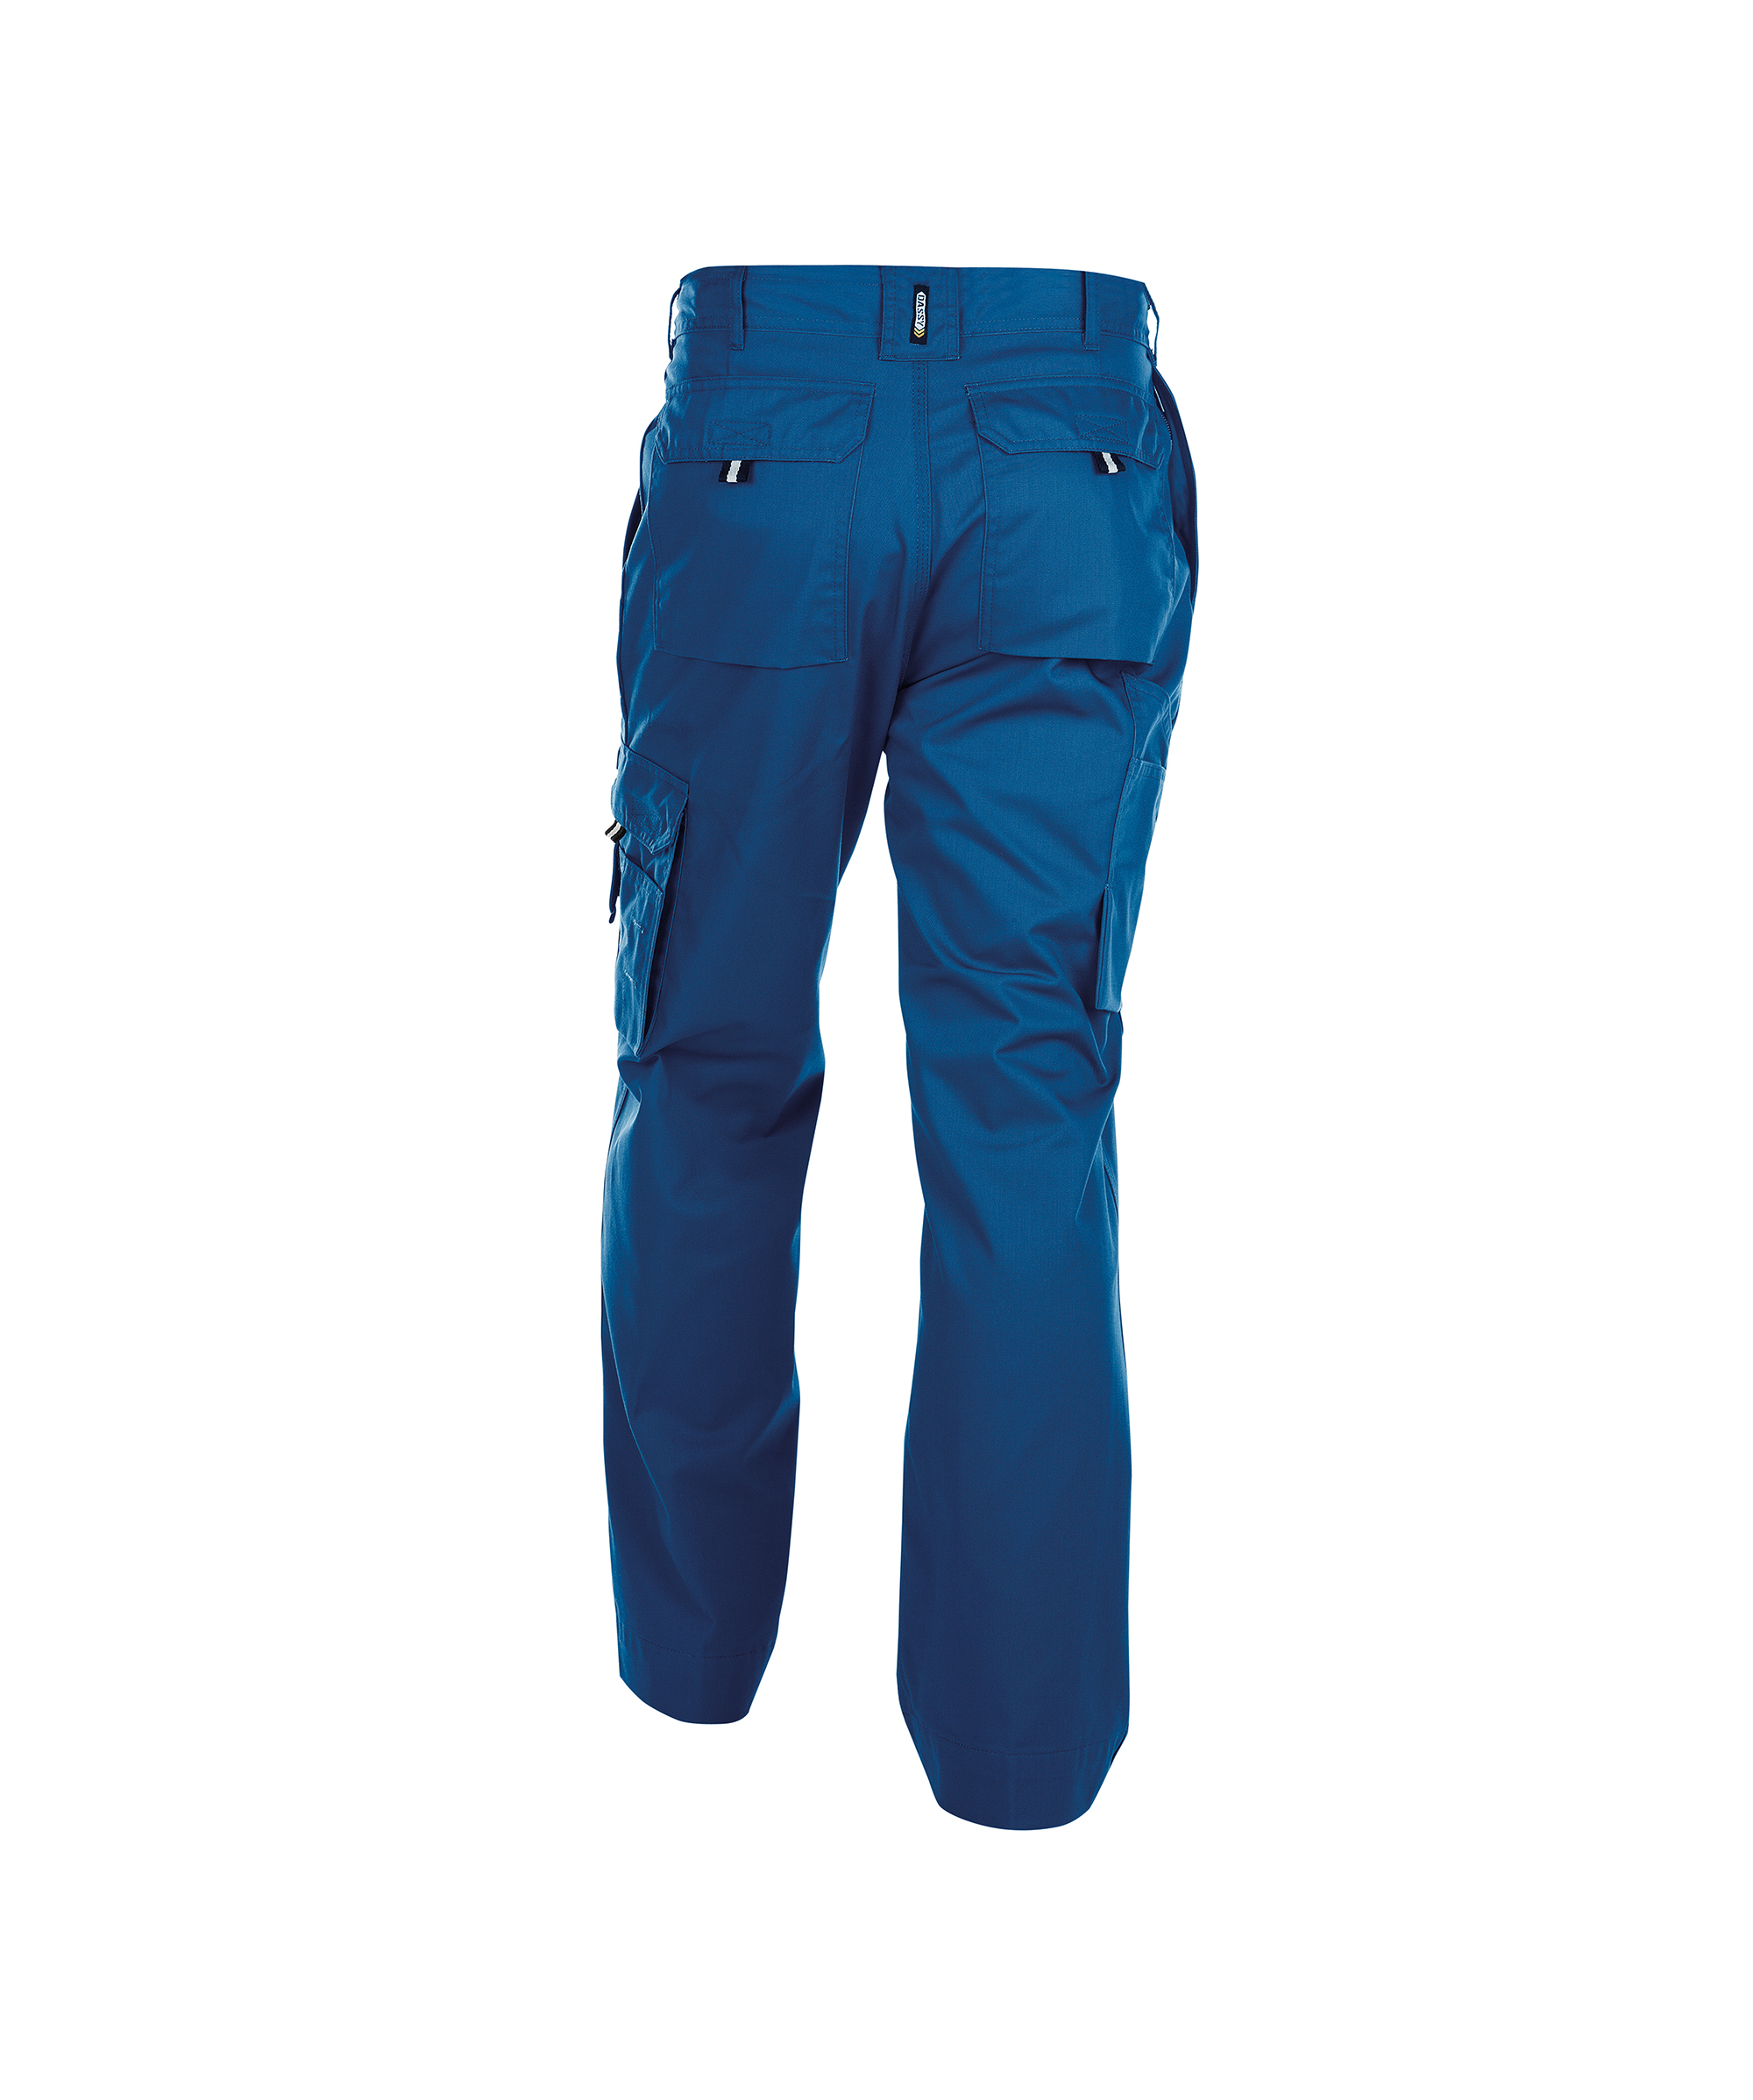 LIVERPOOL_Work-trousers_royal-blue_BACK.jpg